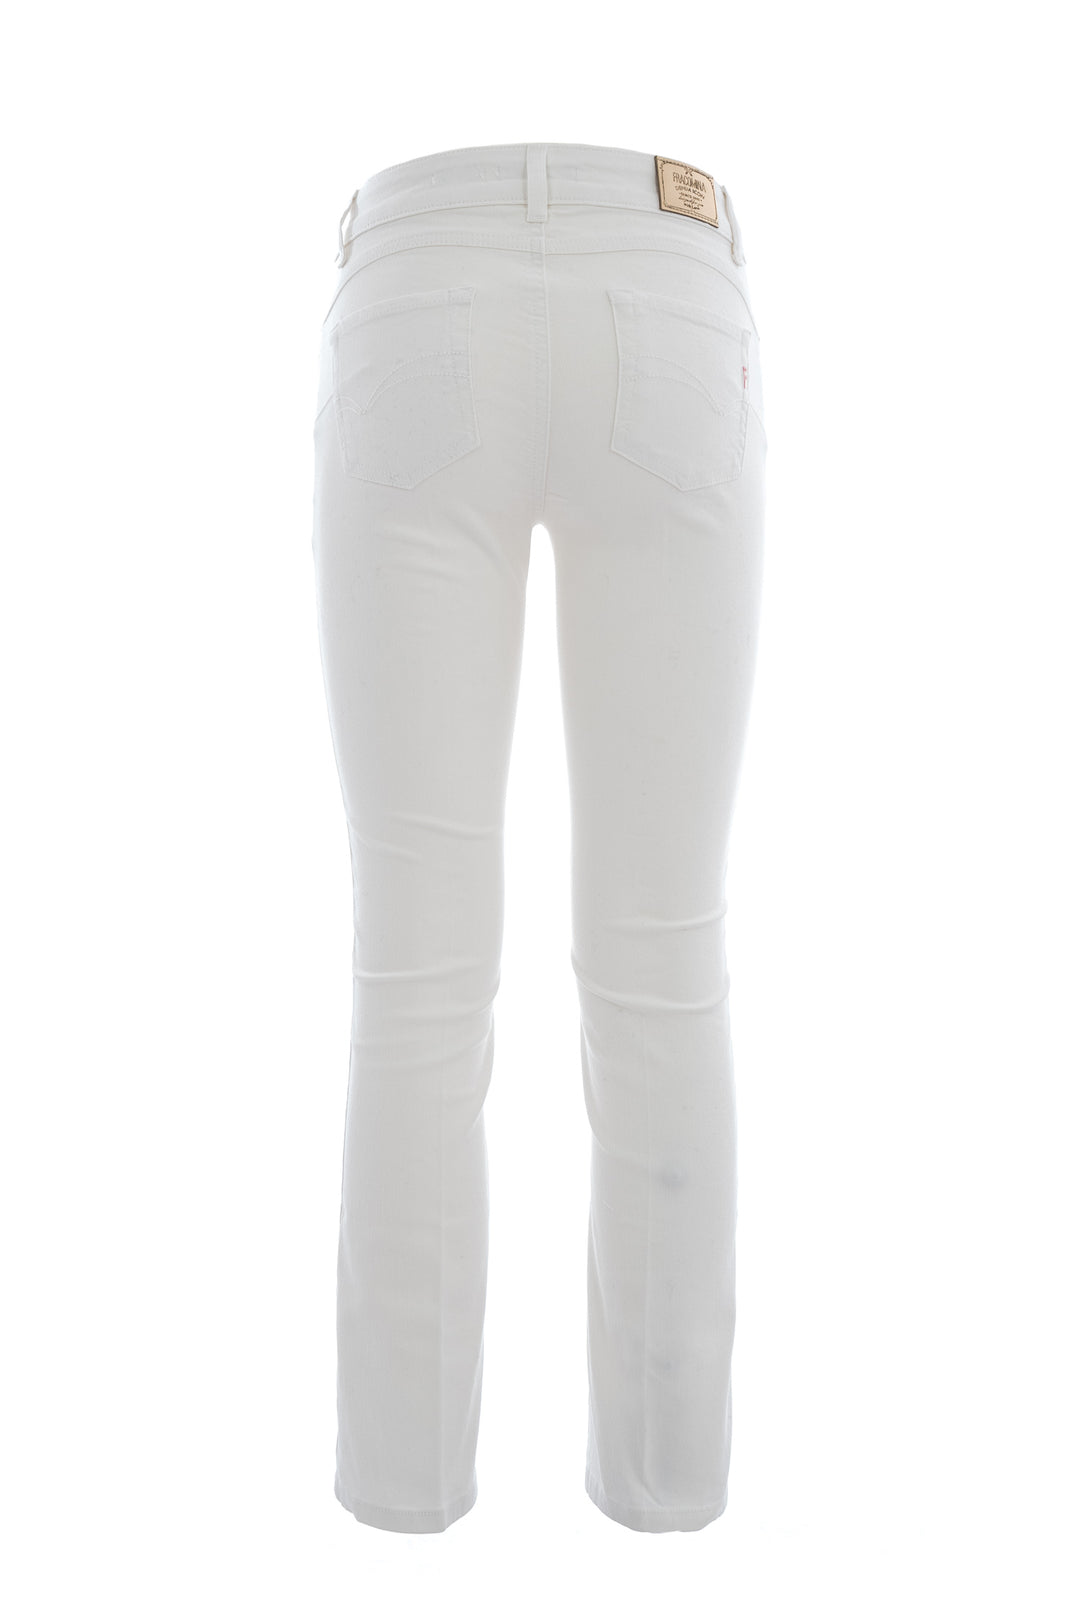 FRACOMINA Jeans Bella flare cropped in sofisticato denim stretch bianco - Mancinelli 1954